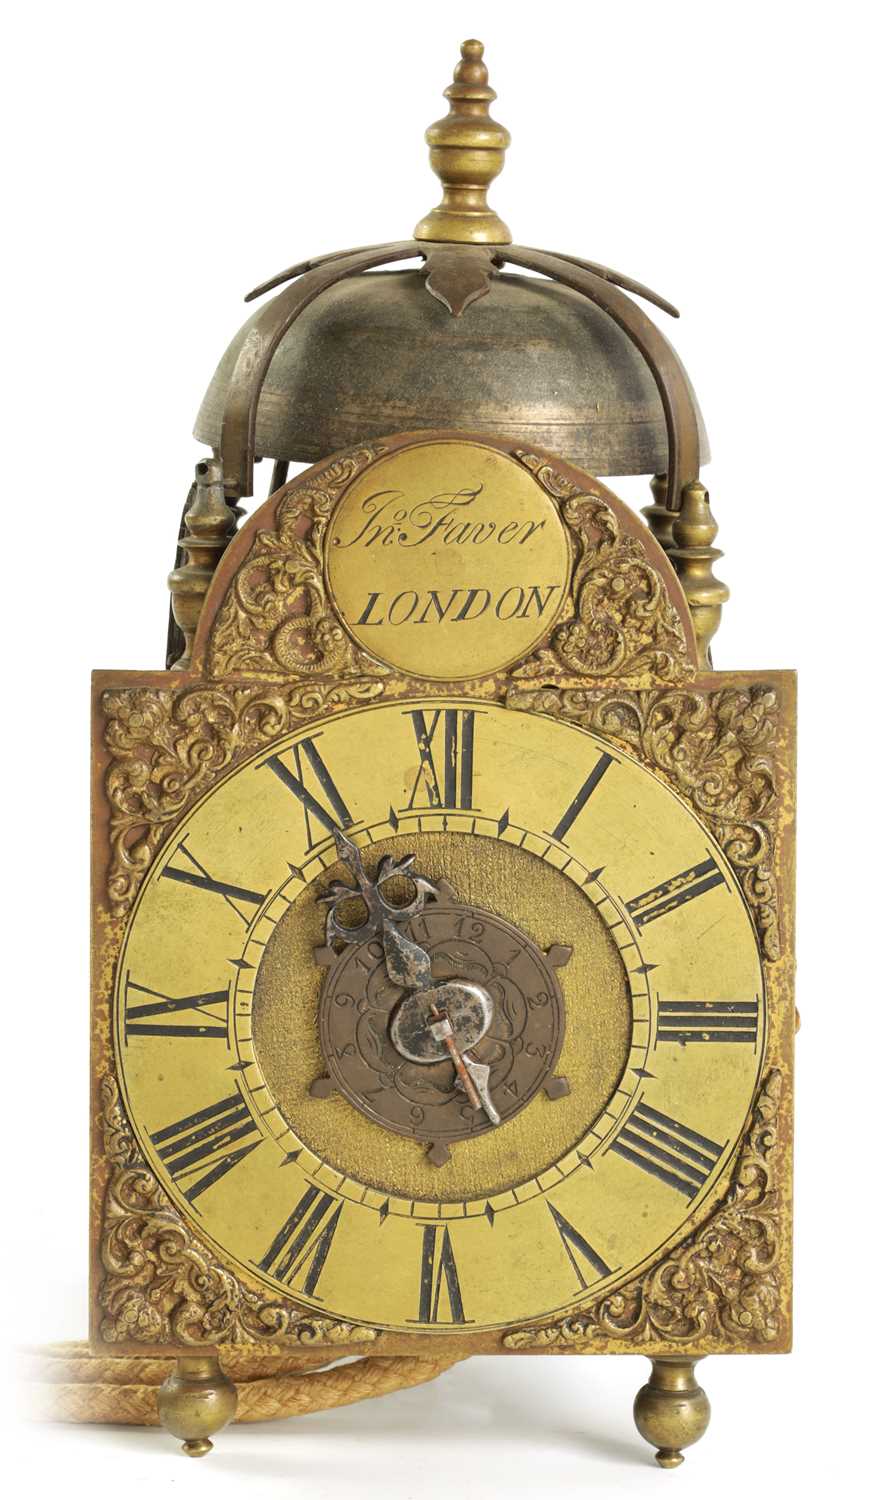 Lot 71 - JOHN FAVER, LONDON. AN EARLY 18TH CENTURY MINIATURE BRASS LANTERN CLOCK